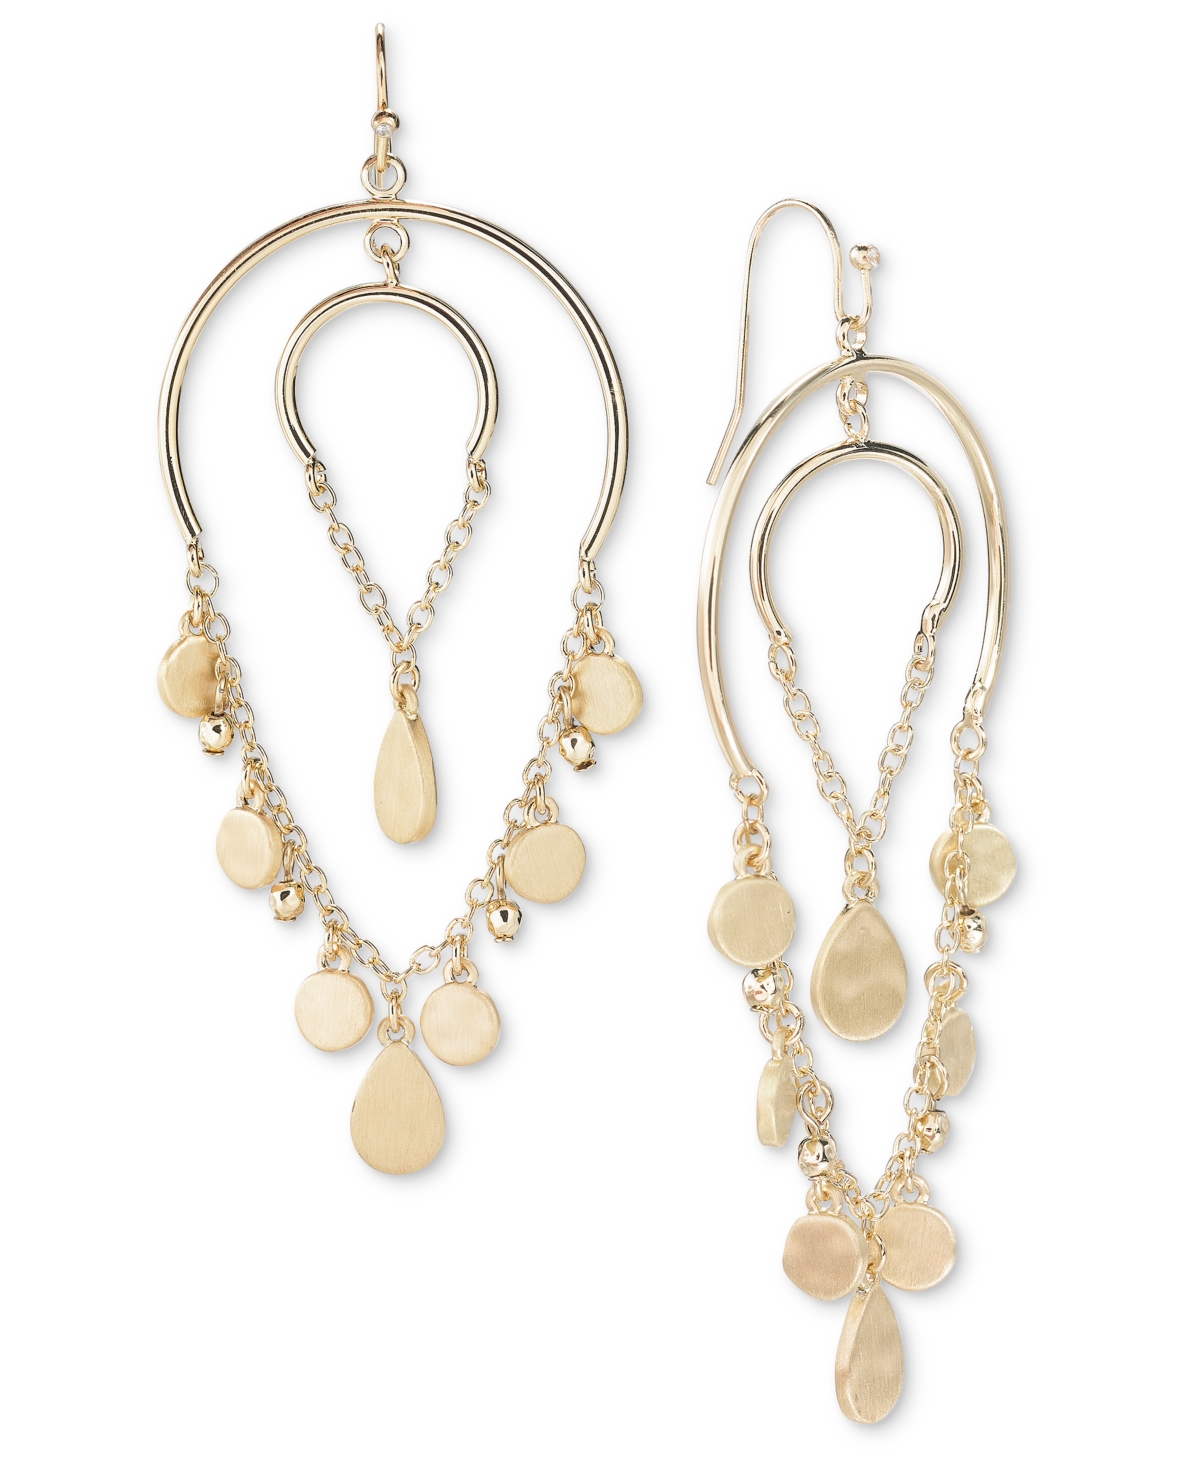 Silver-Tone Beaded Chandelier Earrings, Created for Macy's - Gold